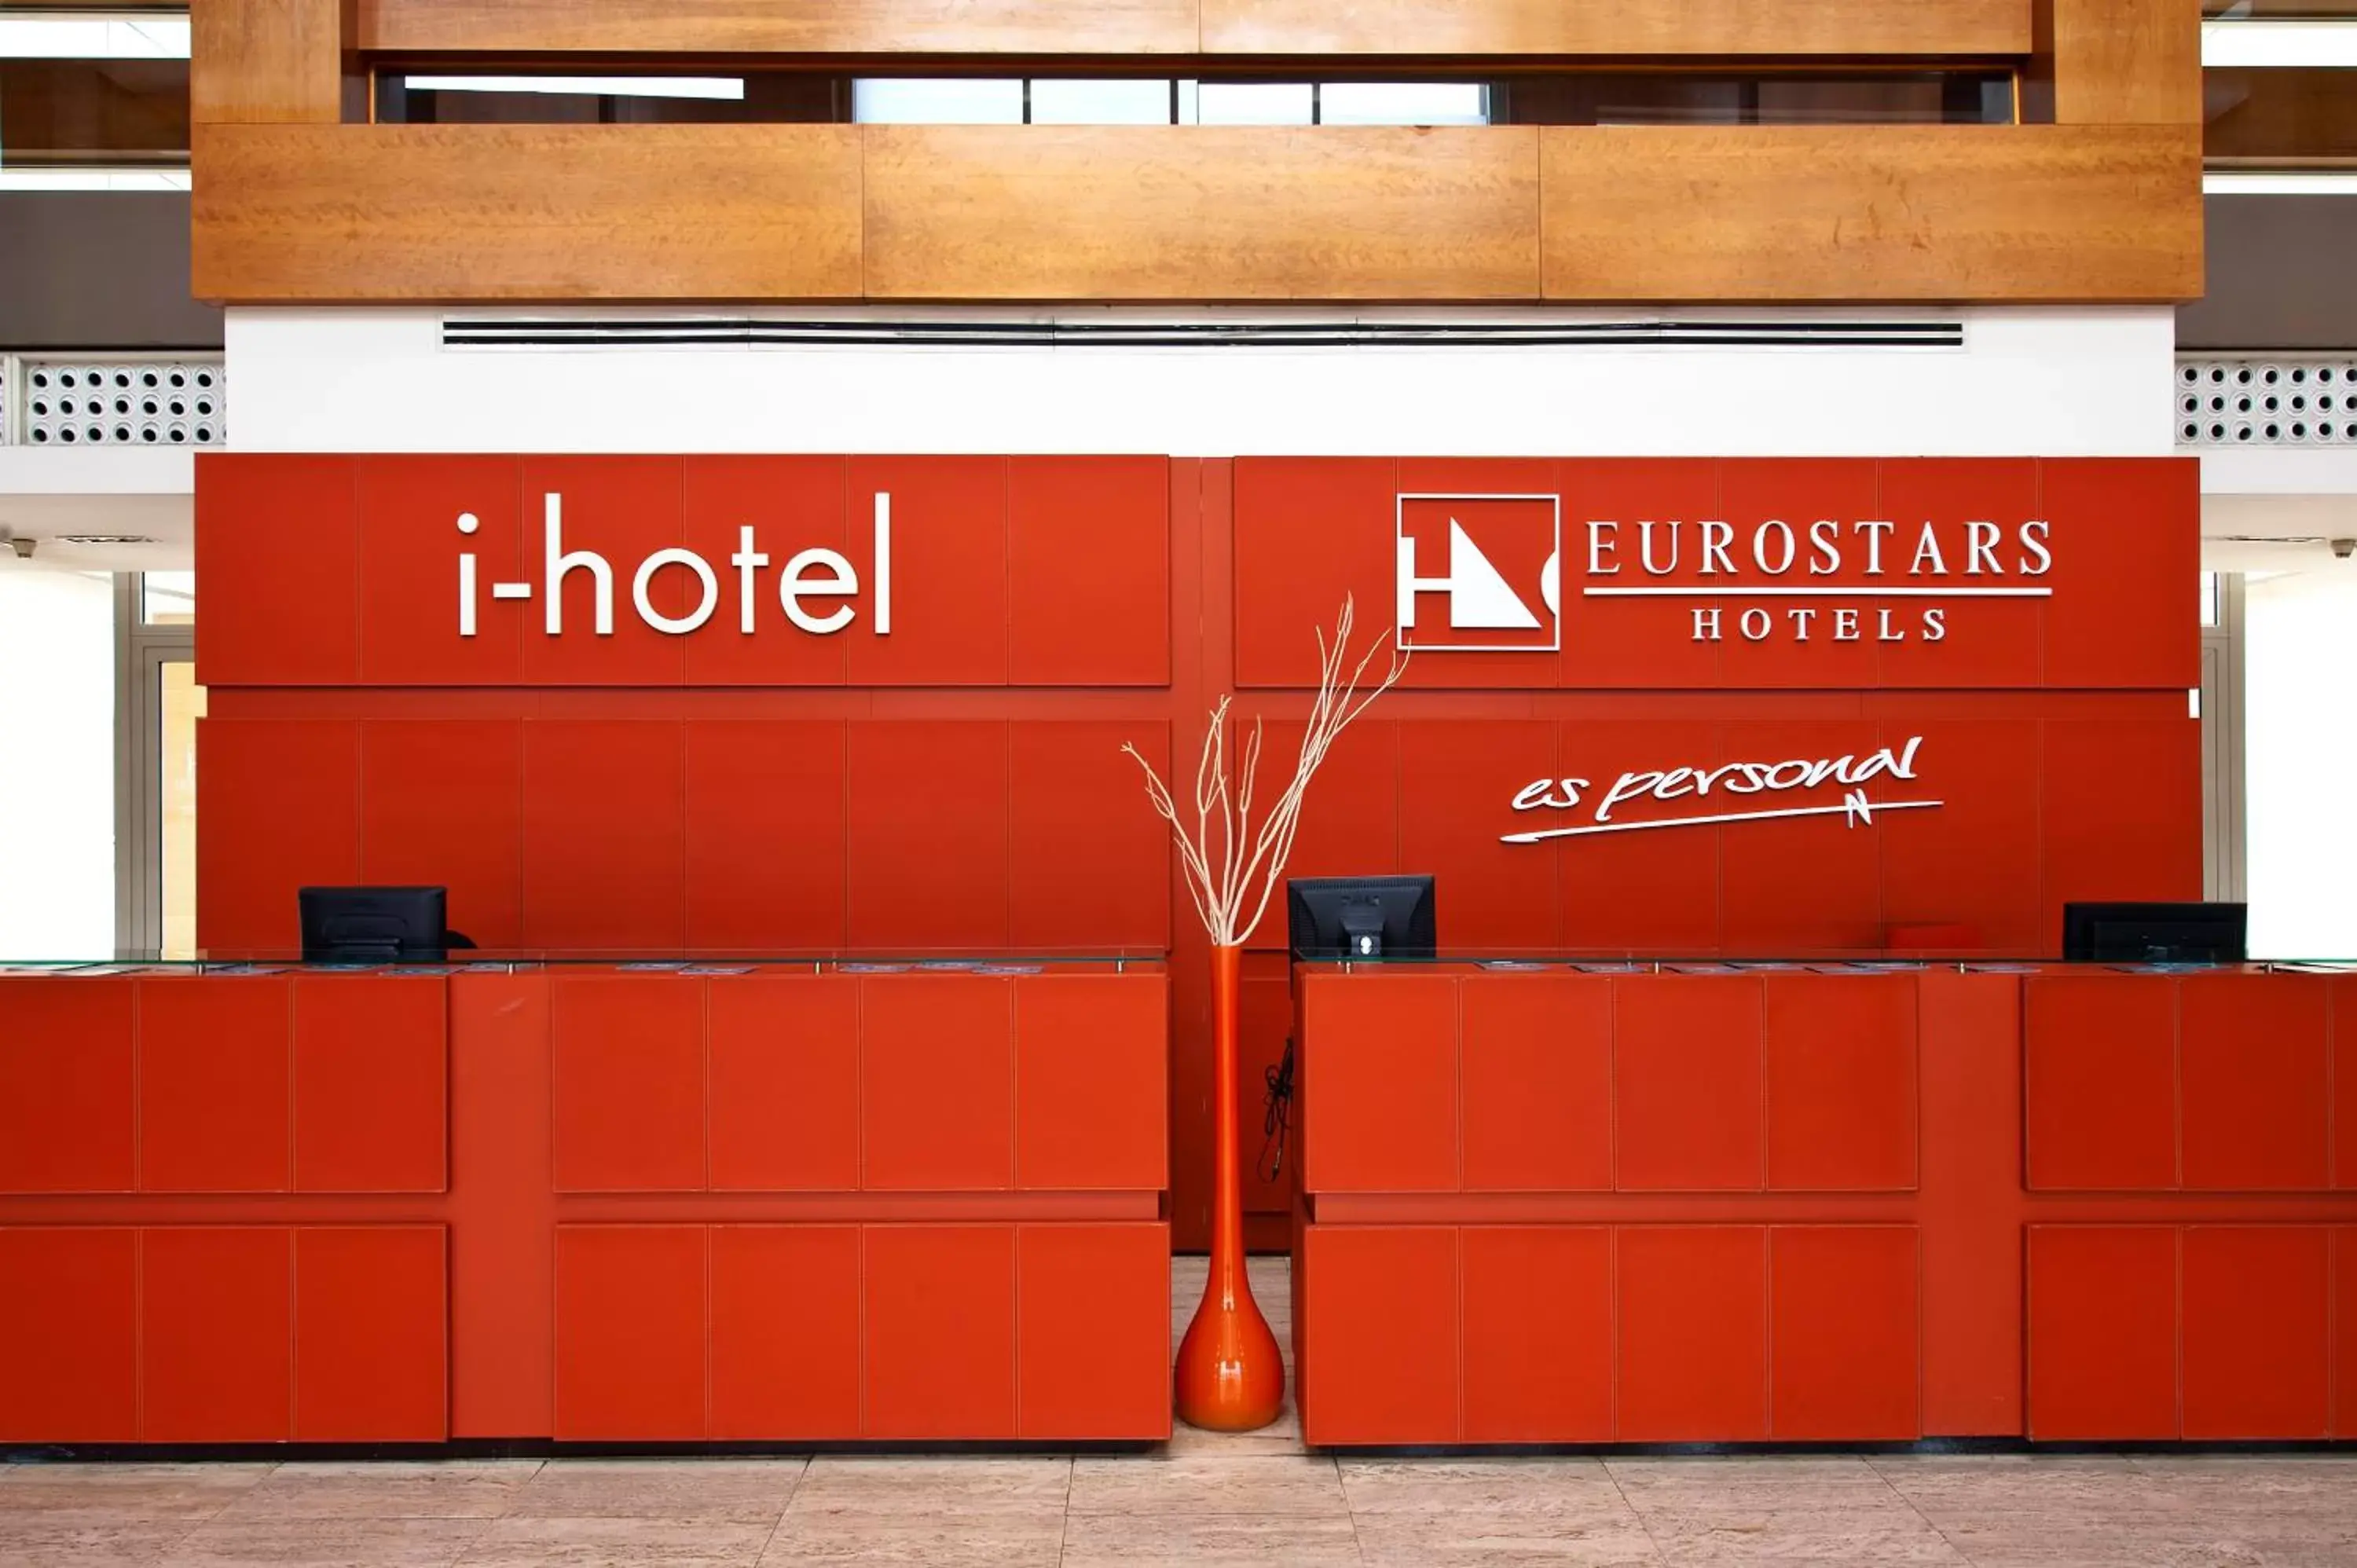 Lobby or reception in Eurostars i-hotel Madrid